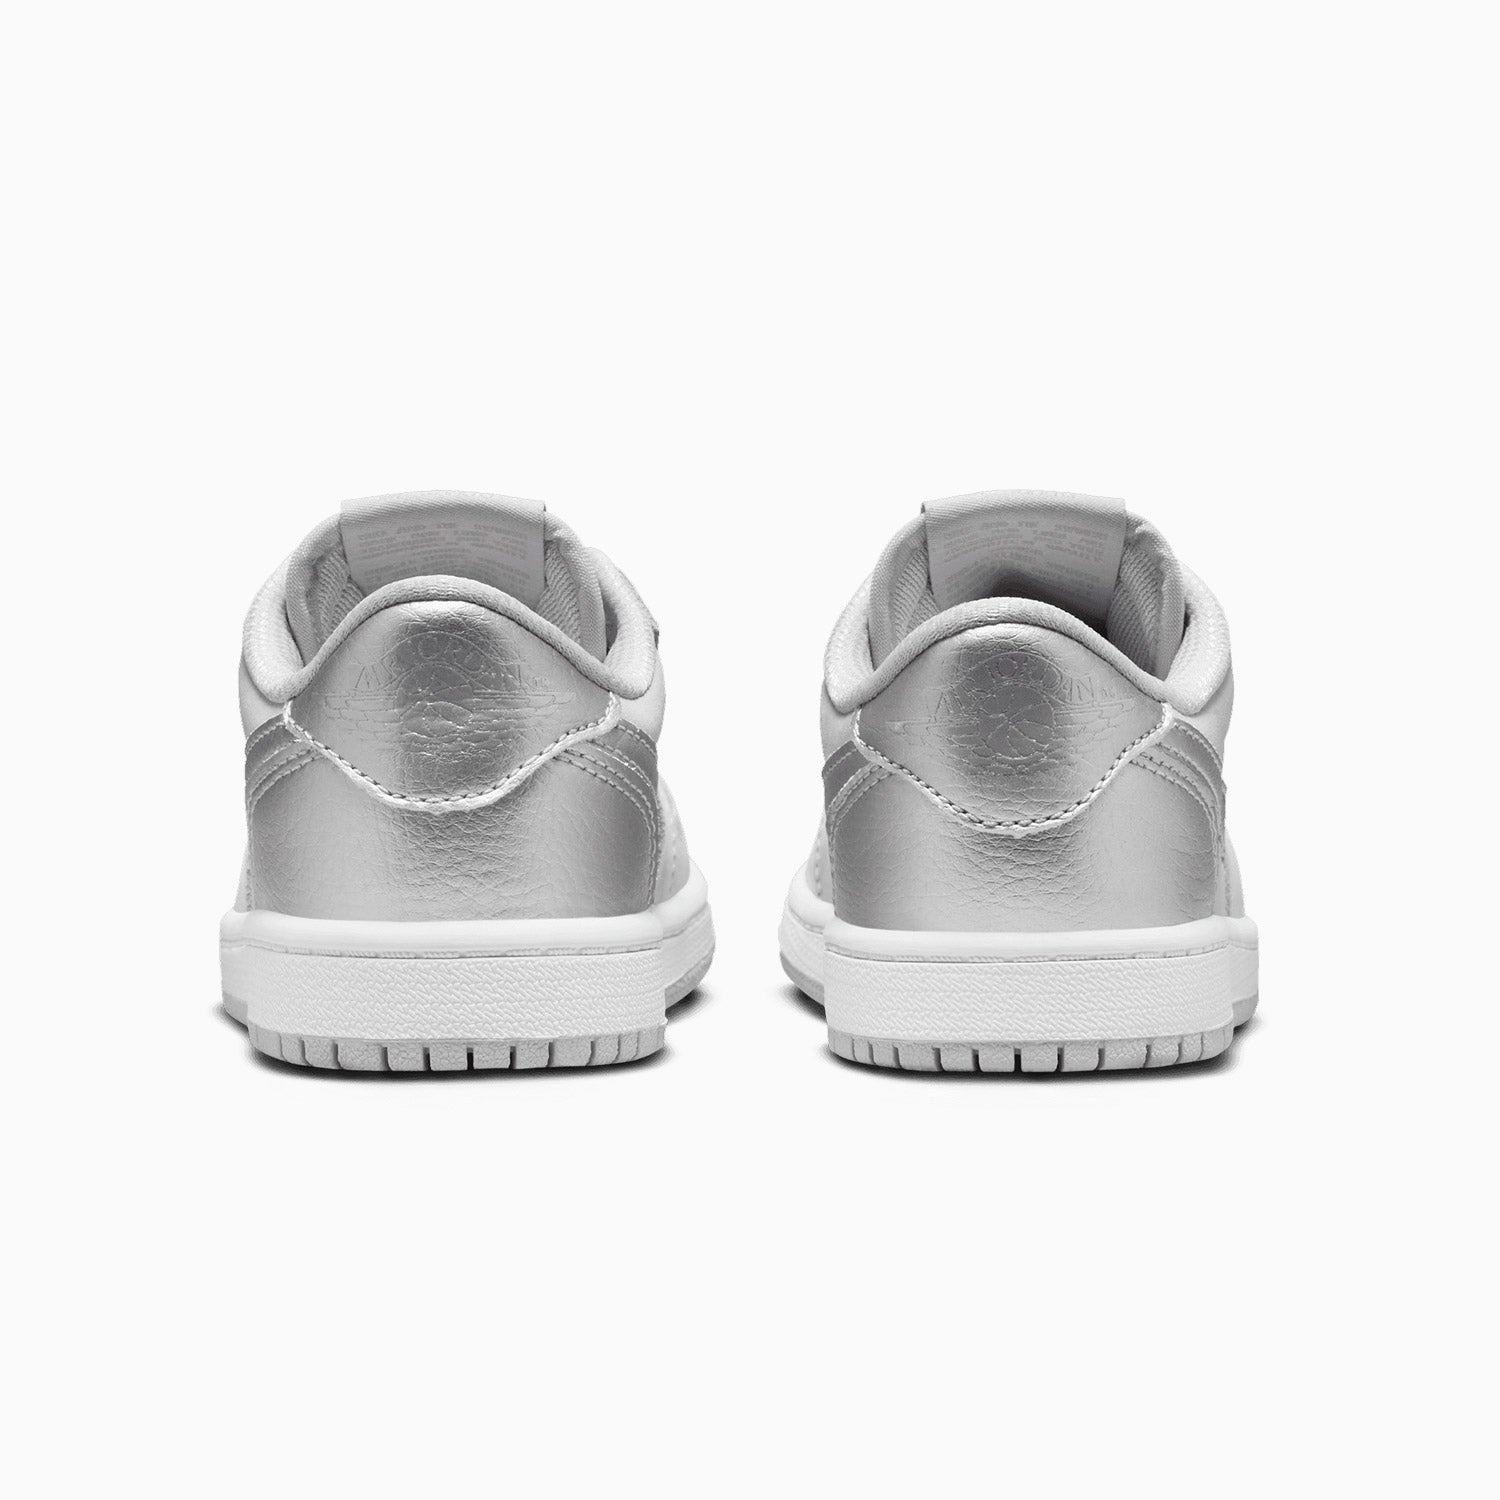 kids-air-jordan-1-retro-og-silver-pre-school-shoes-fq5436-002